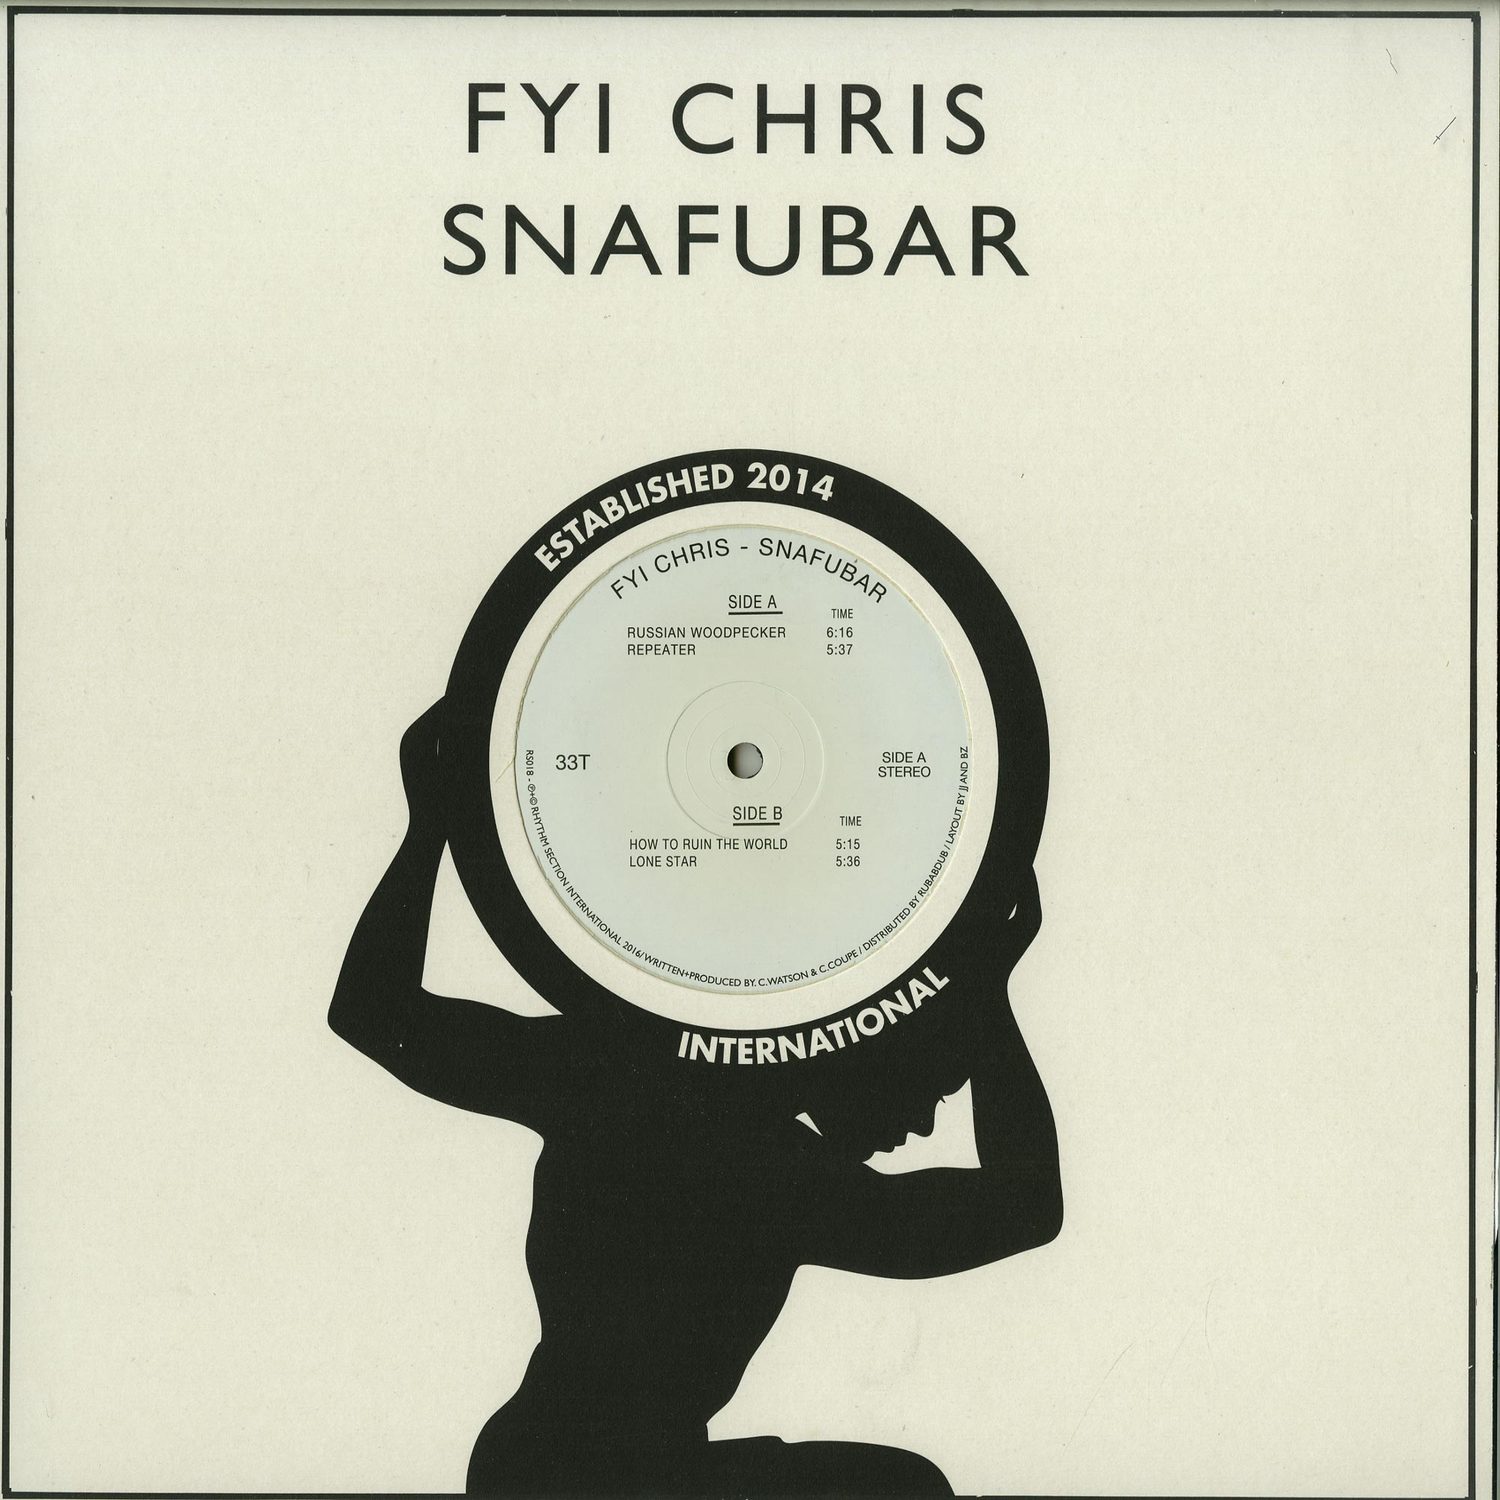 FYI Chris - SNAFUBAR